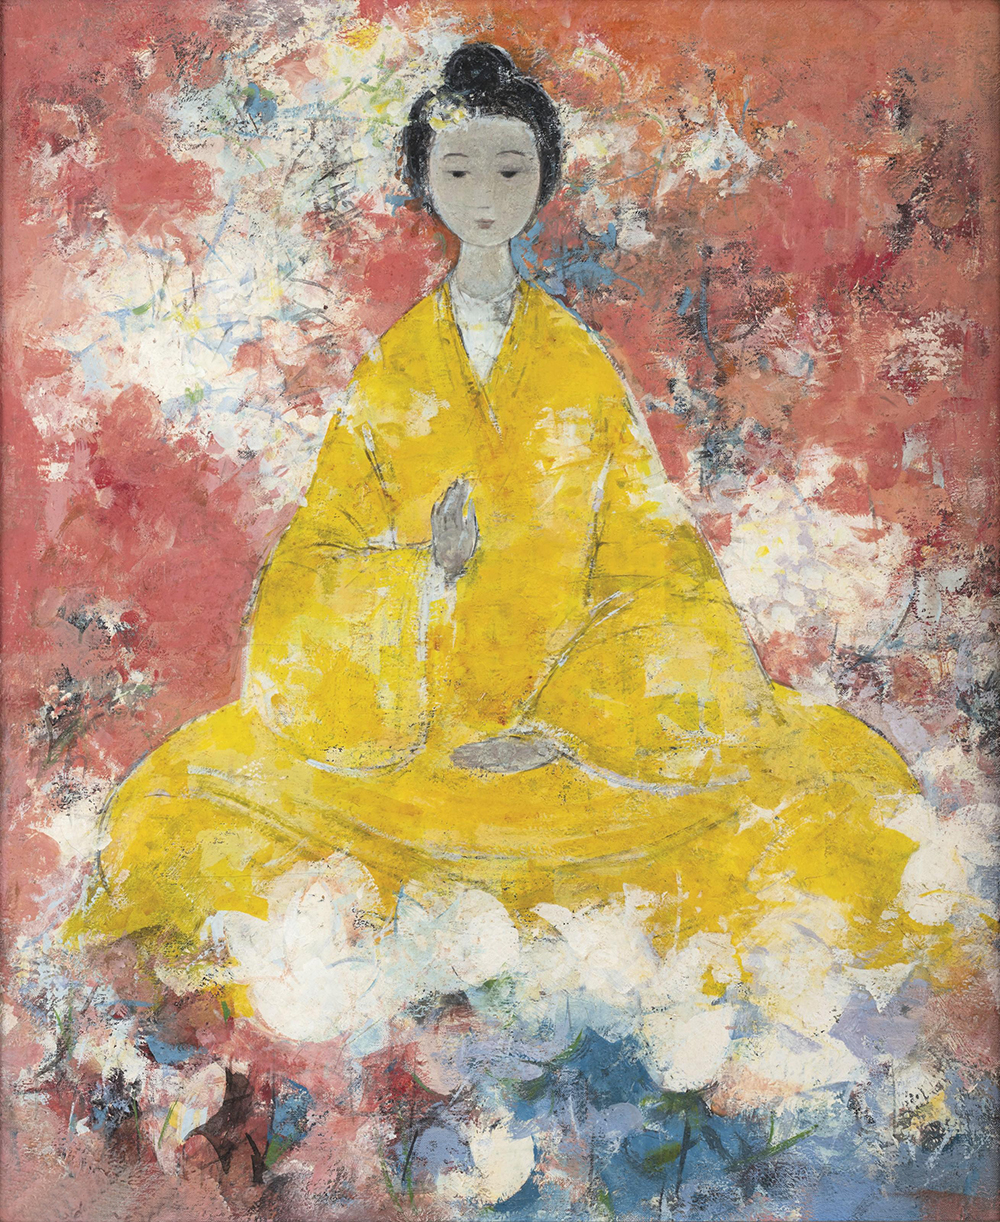 Buddhist Buddha painting on canvas BUD0141